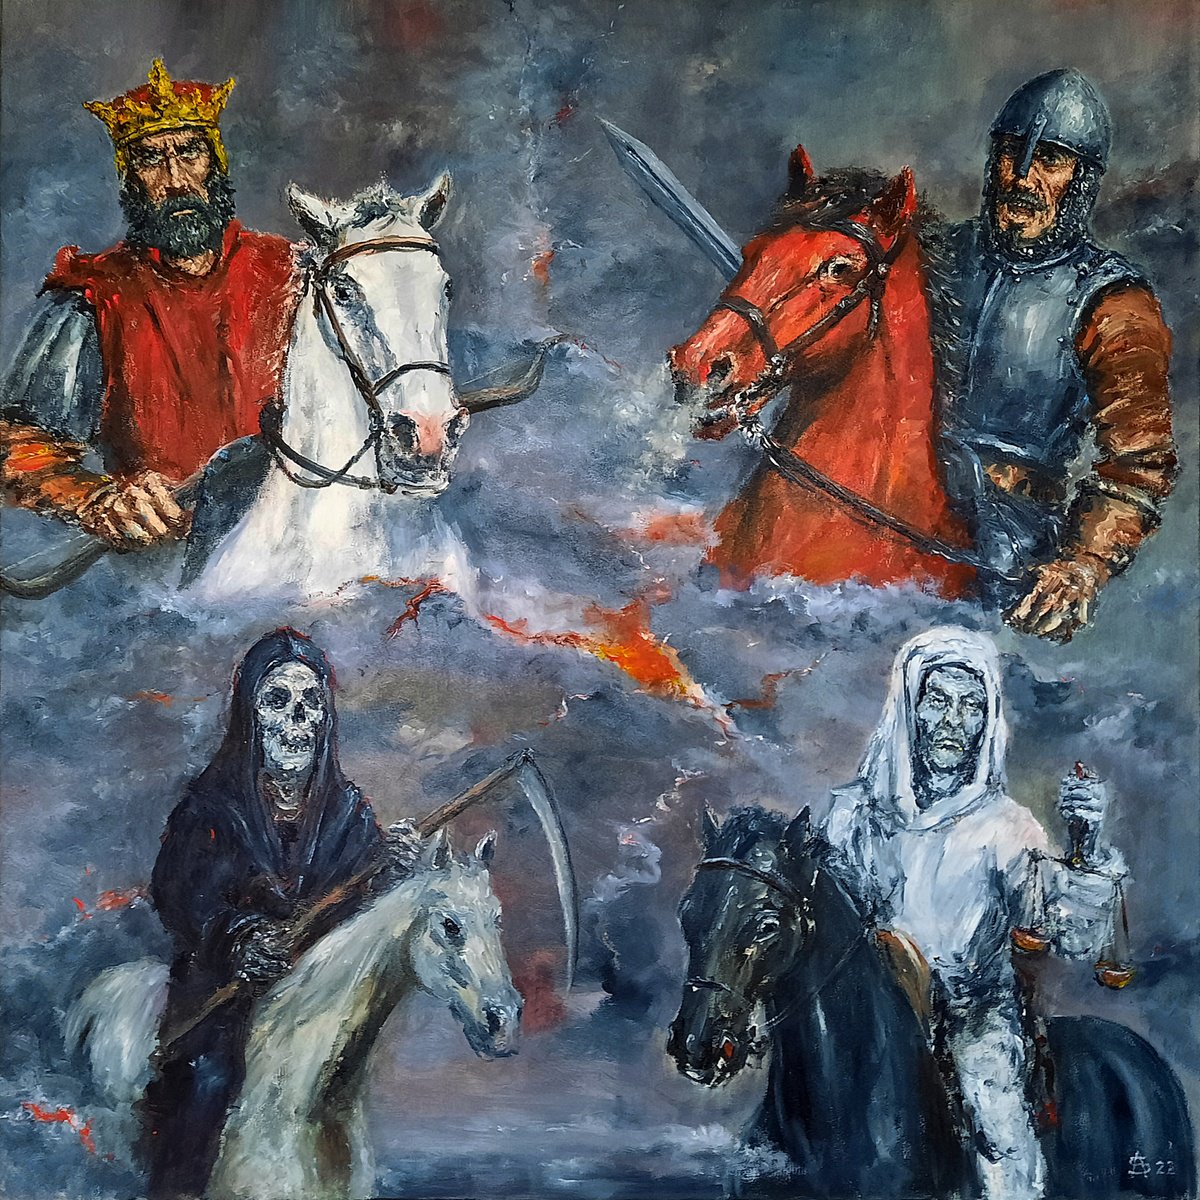 Four horsemen of the apocalypse by Arturas Slapsys